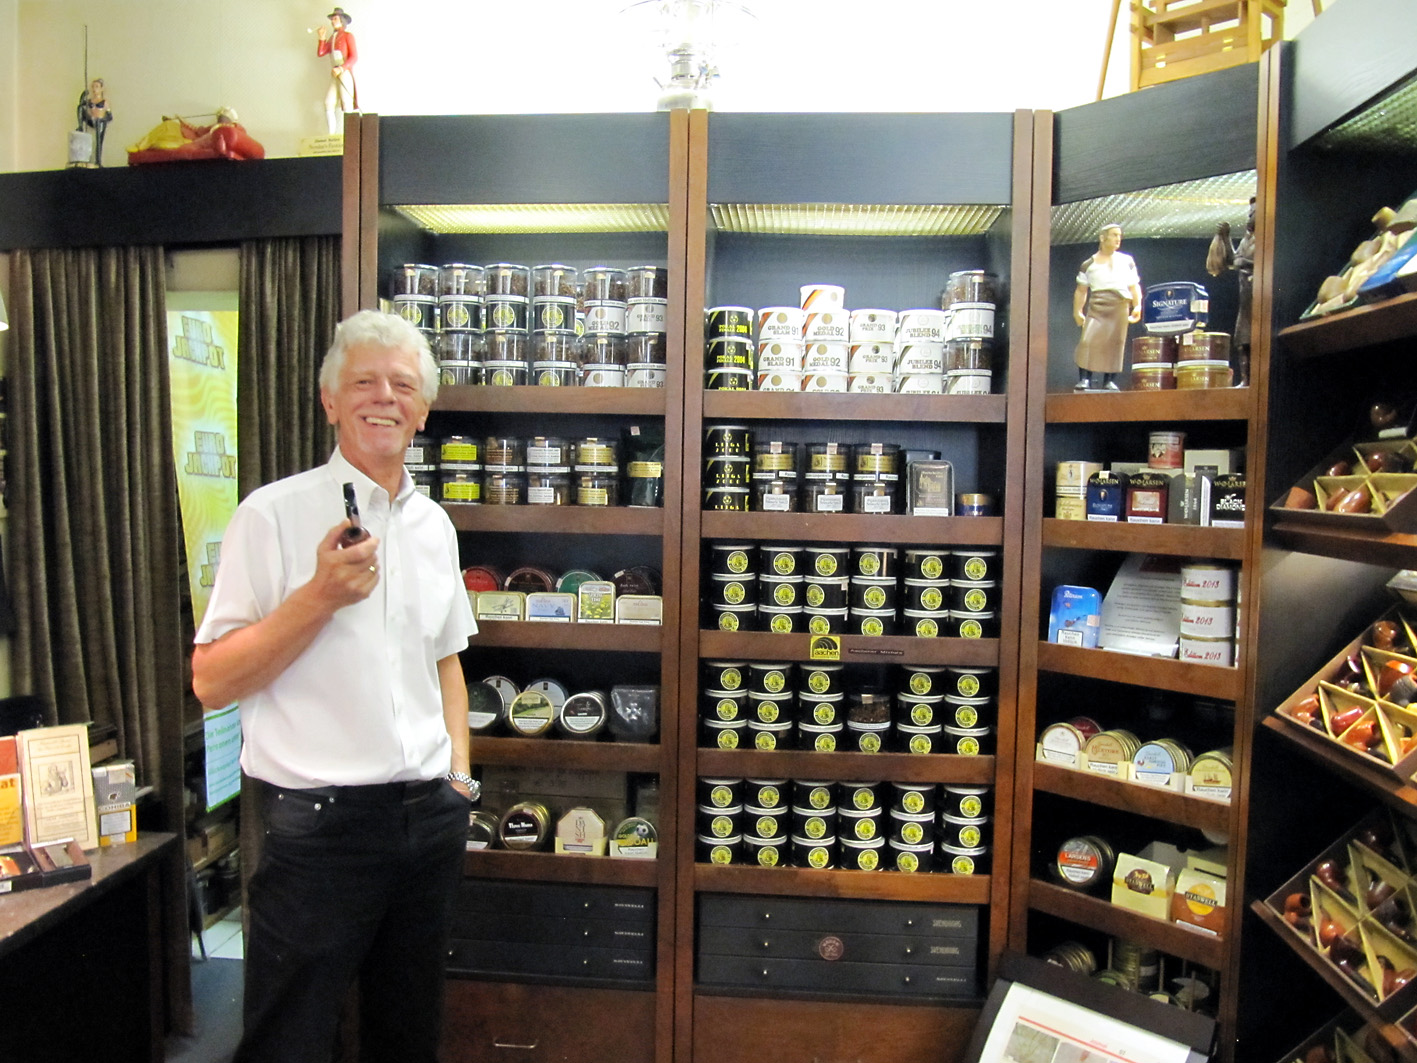 Herr Jurewicz in his shop